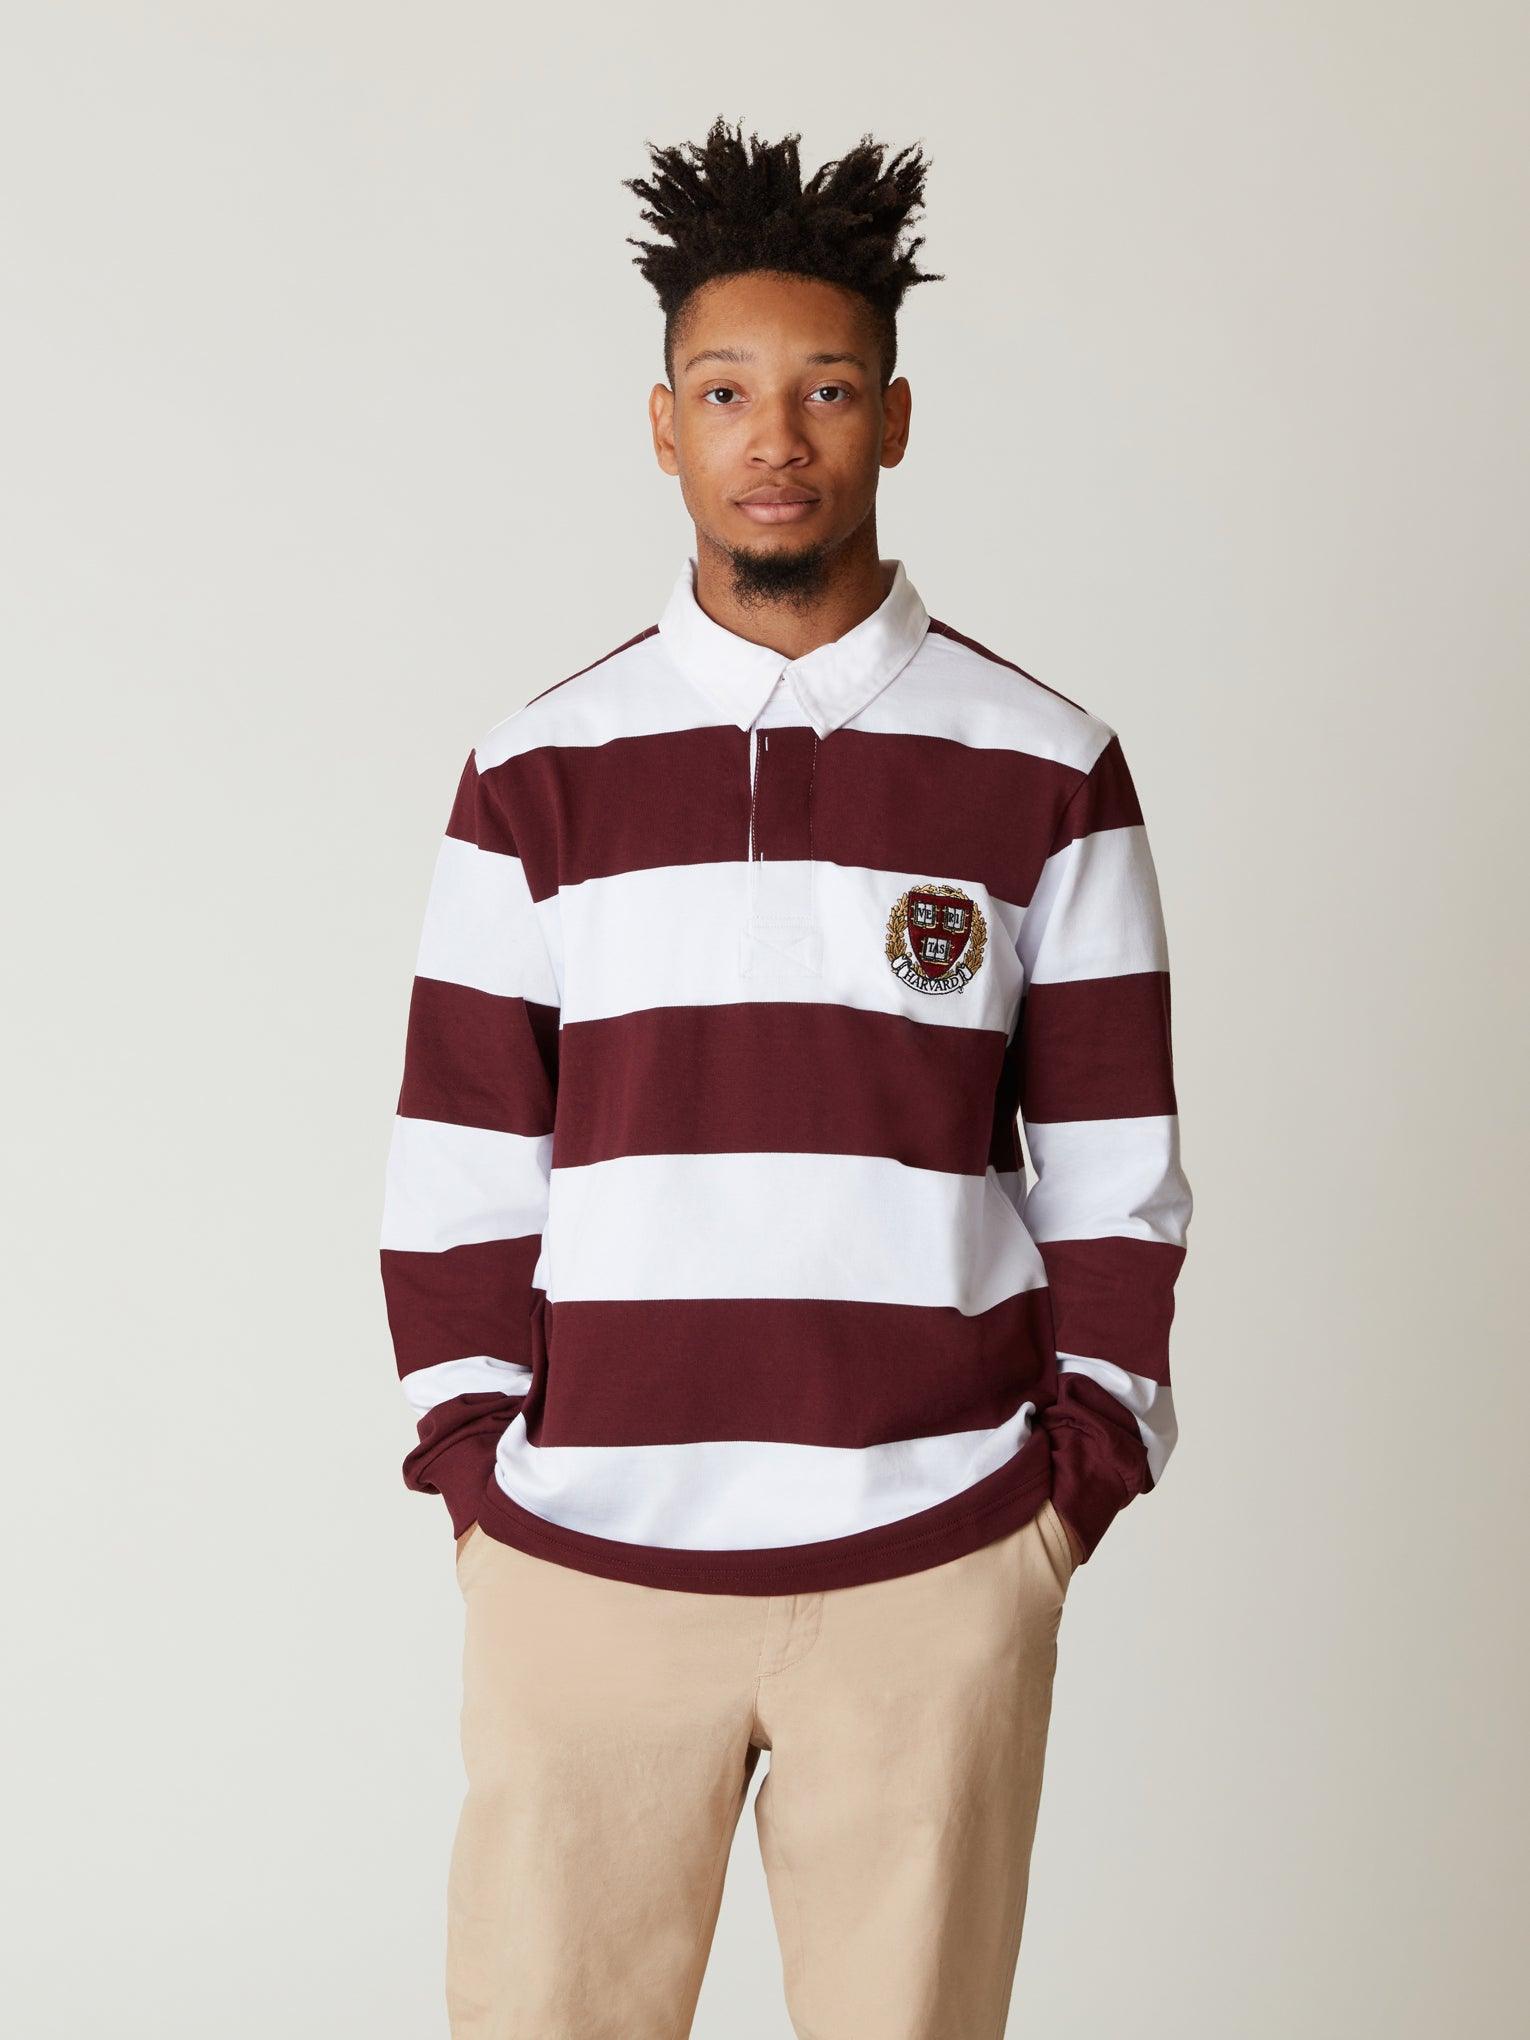 Harvard Striped Rugby Shirt